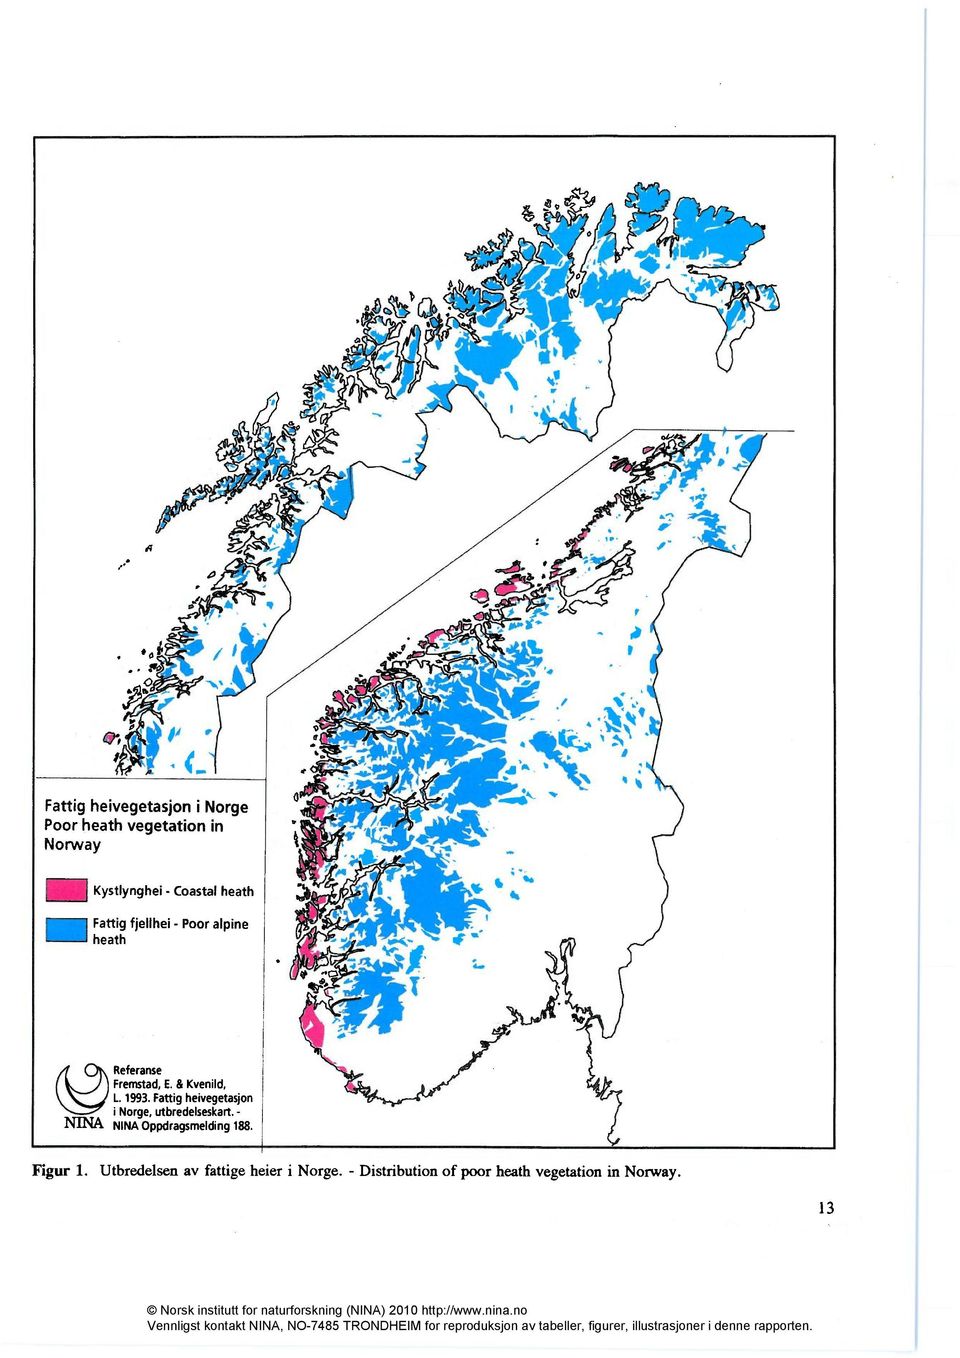 Fattig fjellhei - Poor alpine heath e(k 2) Referanse Fremstad, E. & Kvenild, L 1993.